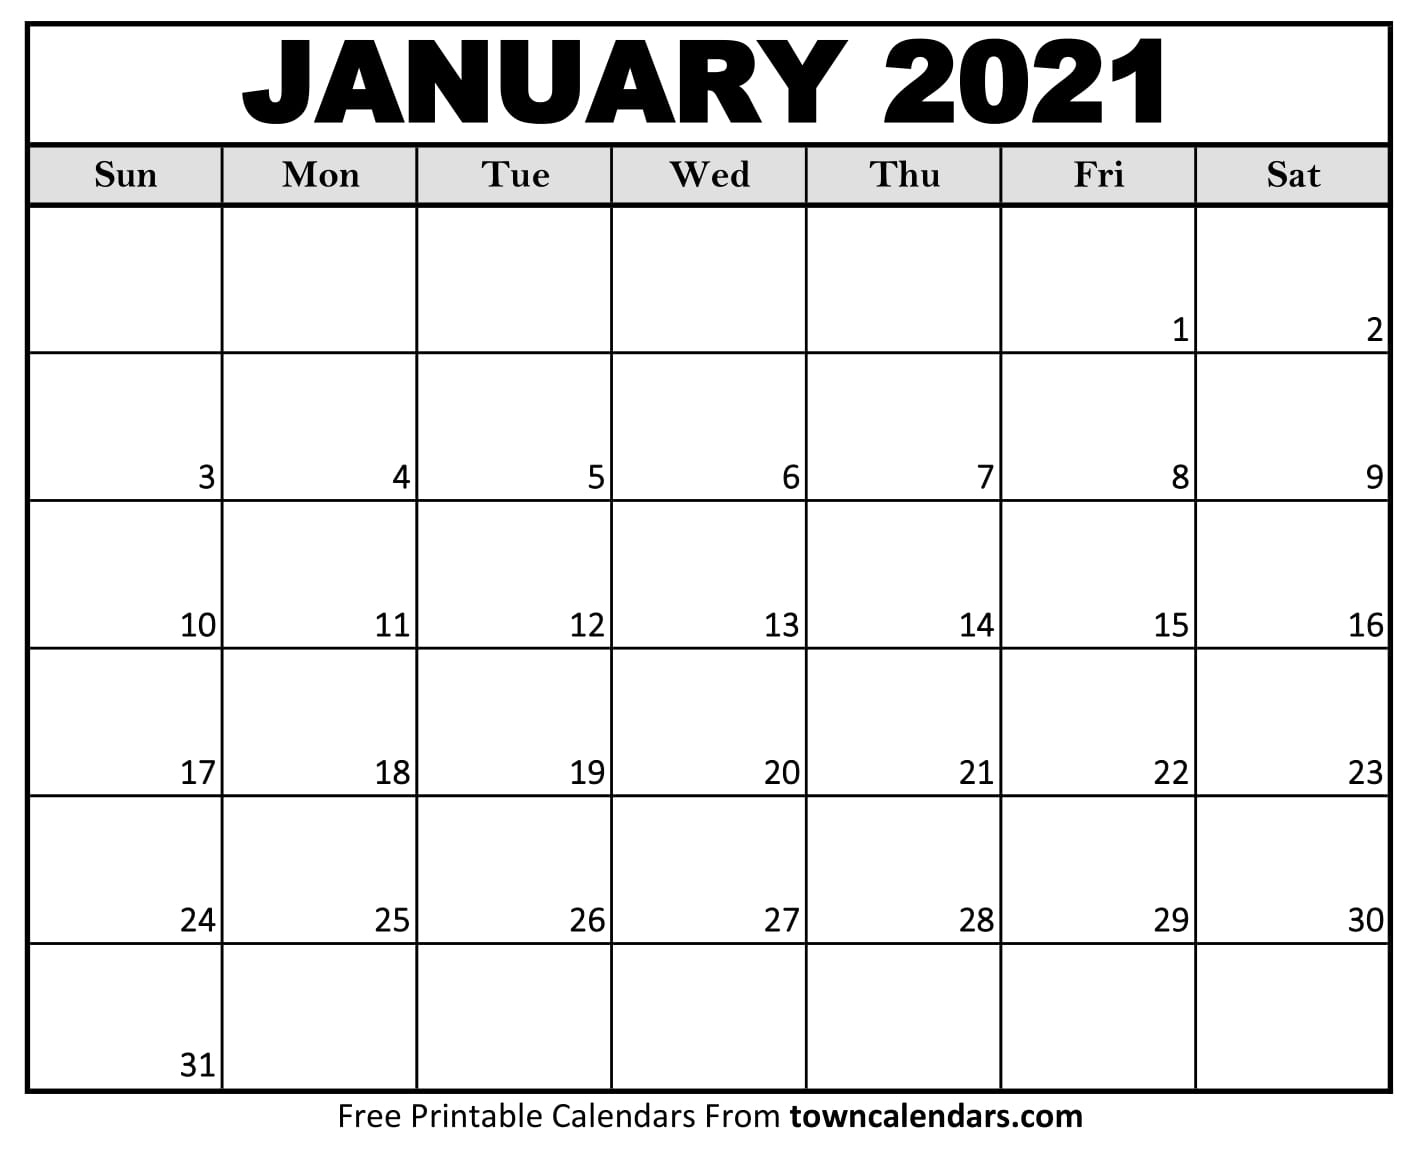 Printable January 2021 Calendar - Towncalendars January To December 2021 Calendar